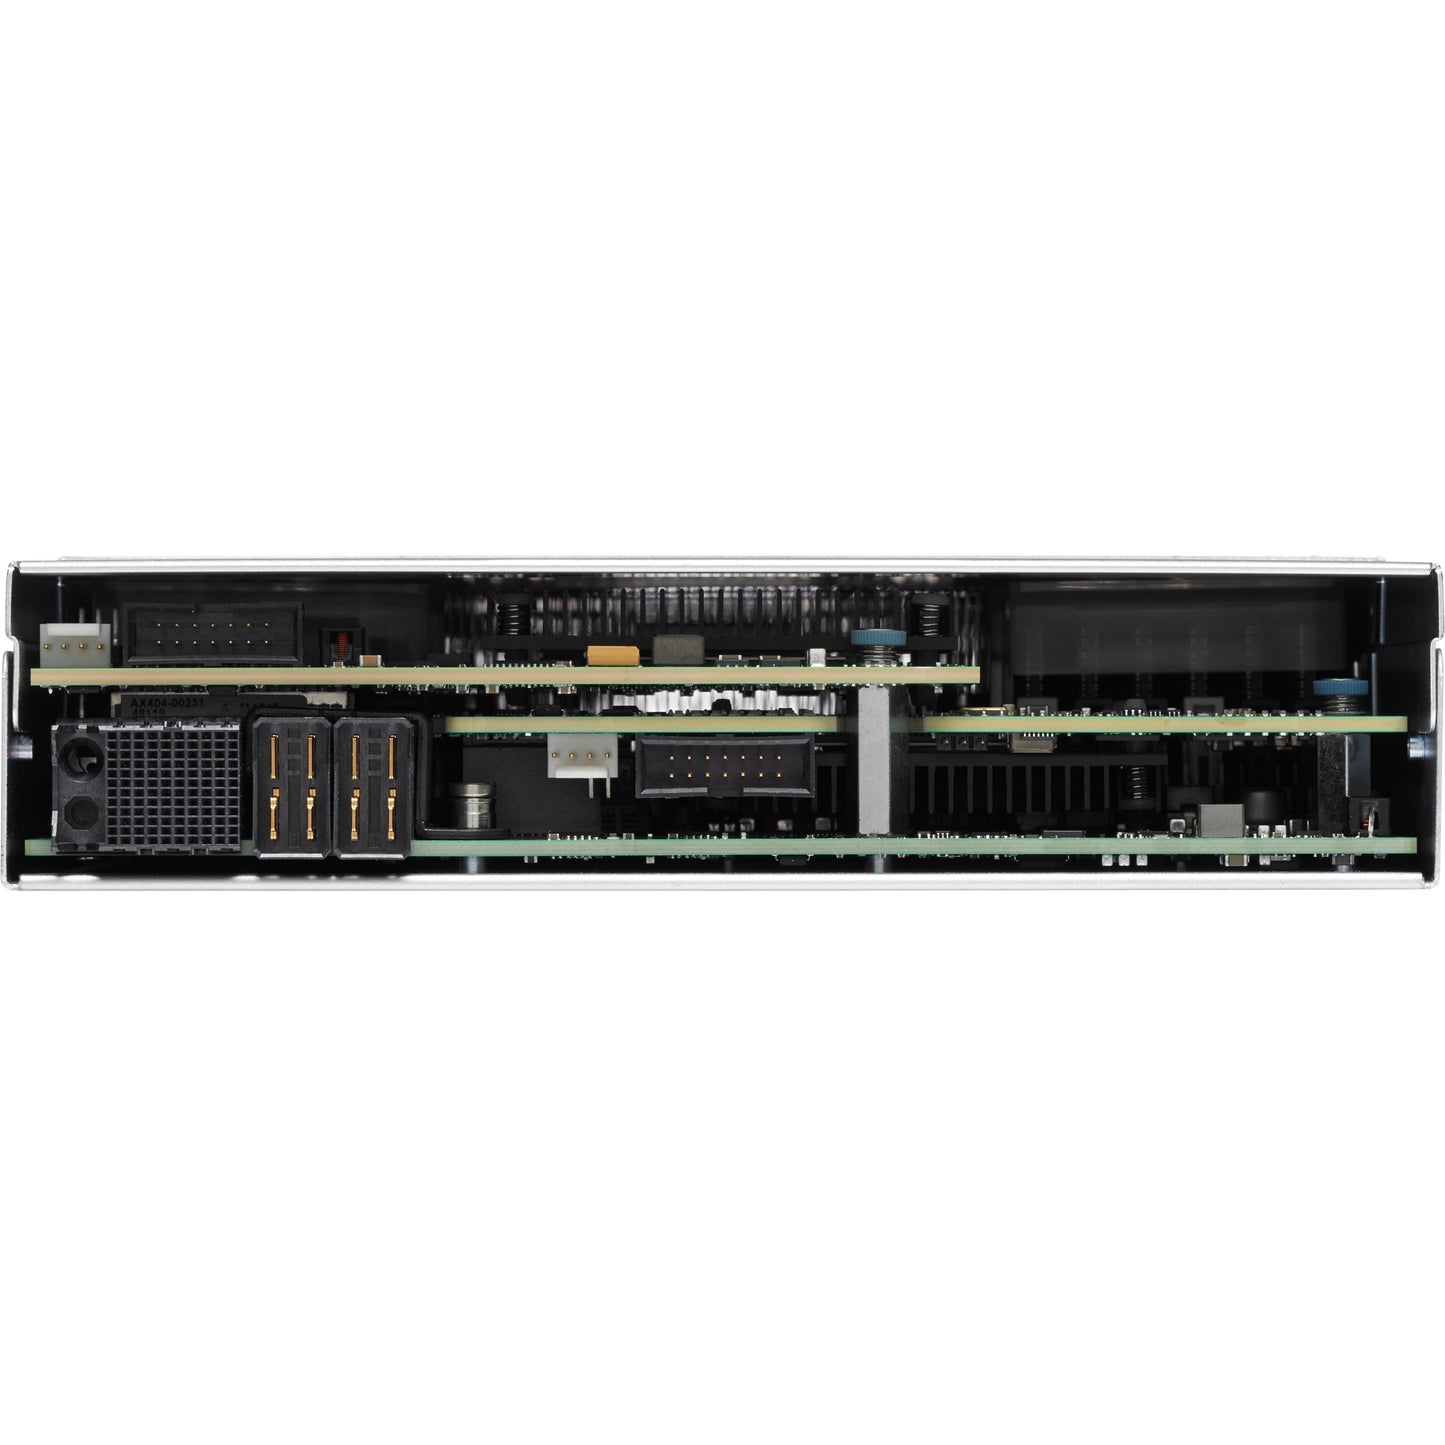 Cisco B200 M4 Blade Server - 2 x Intel Xeon E5-2637 v3 3.50 GHz - 256 GB RAM - 12Gb/s SAS Serial ATA Controller